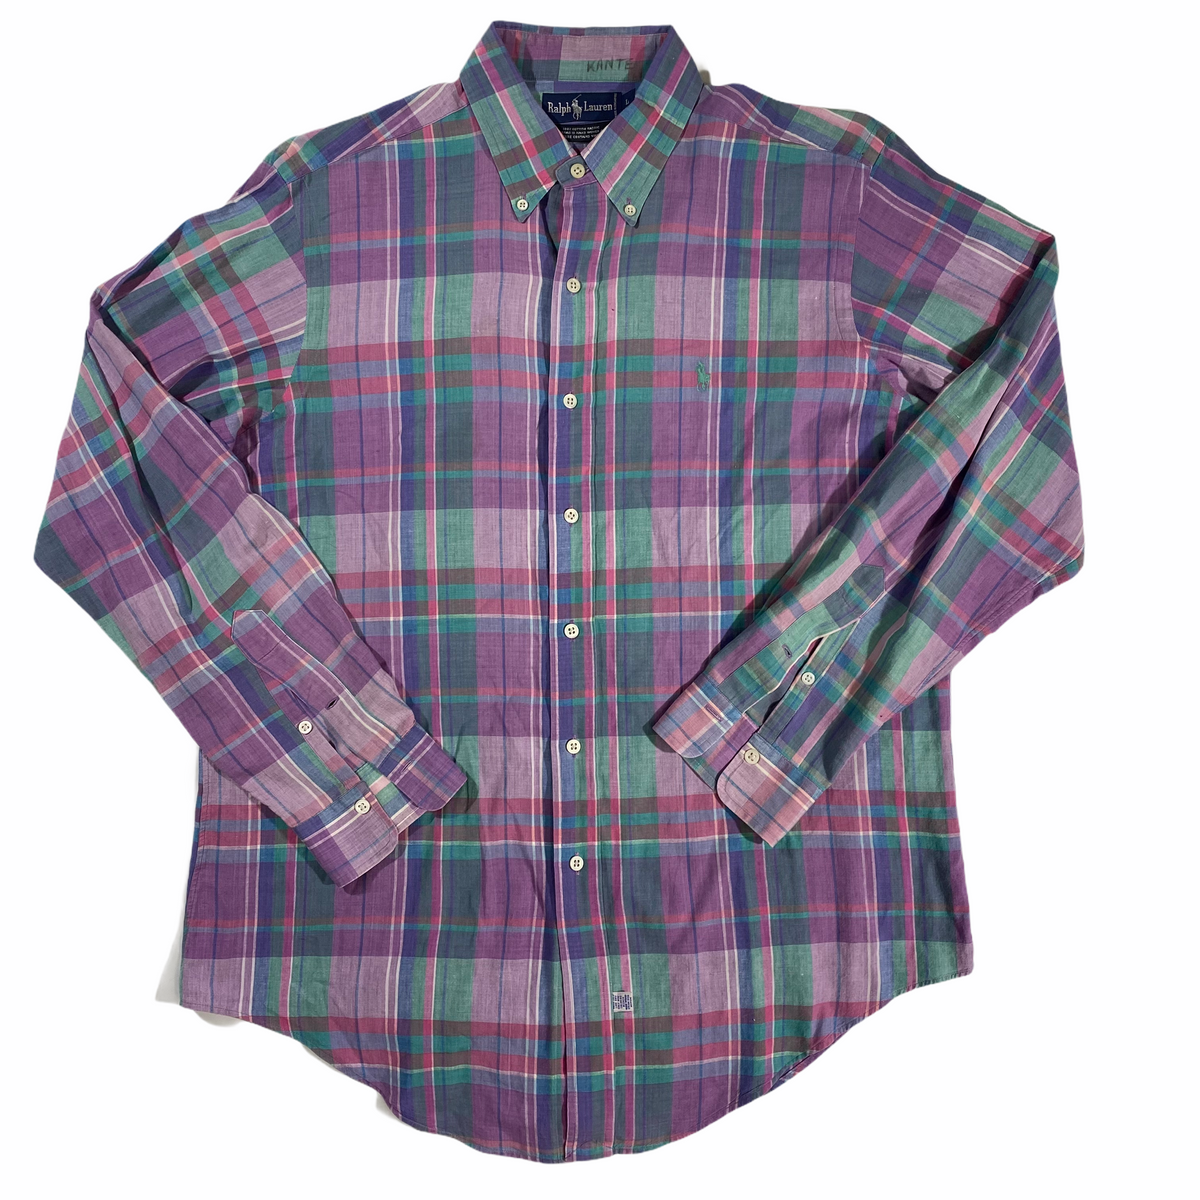 90s Polo ralph lauren madras plaid shirt. medium – Vintage Sponsor